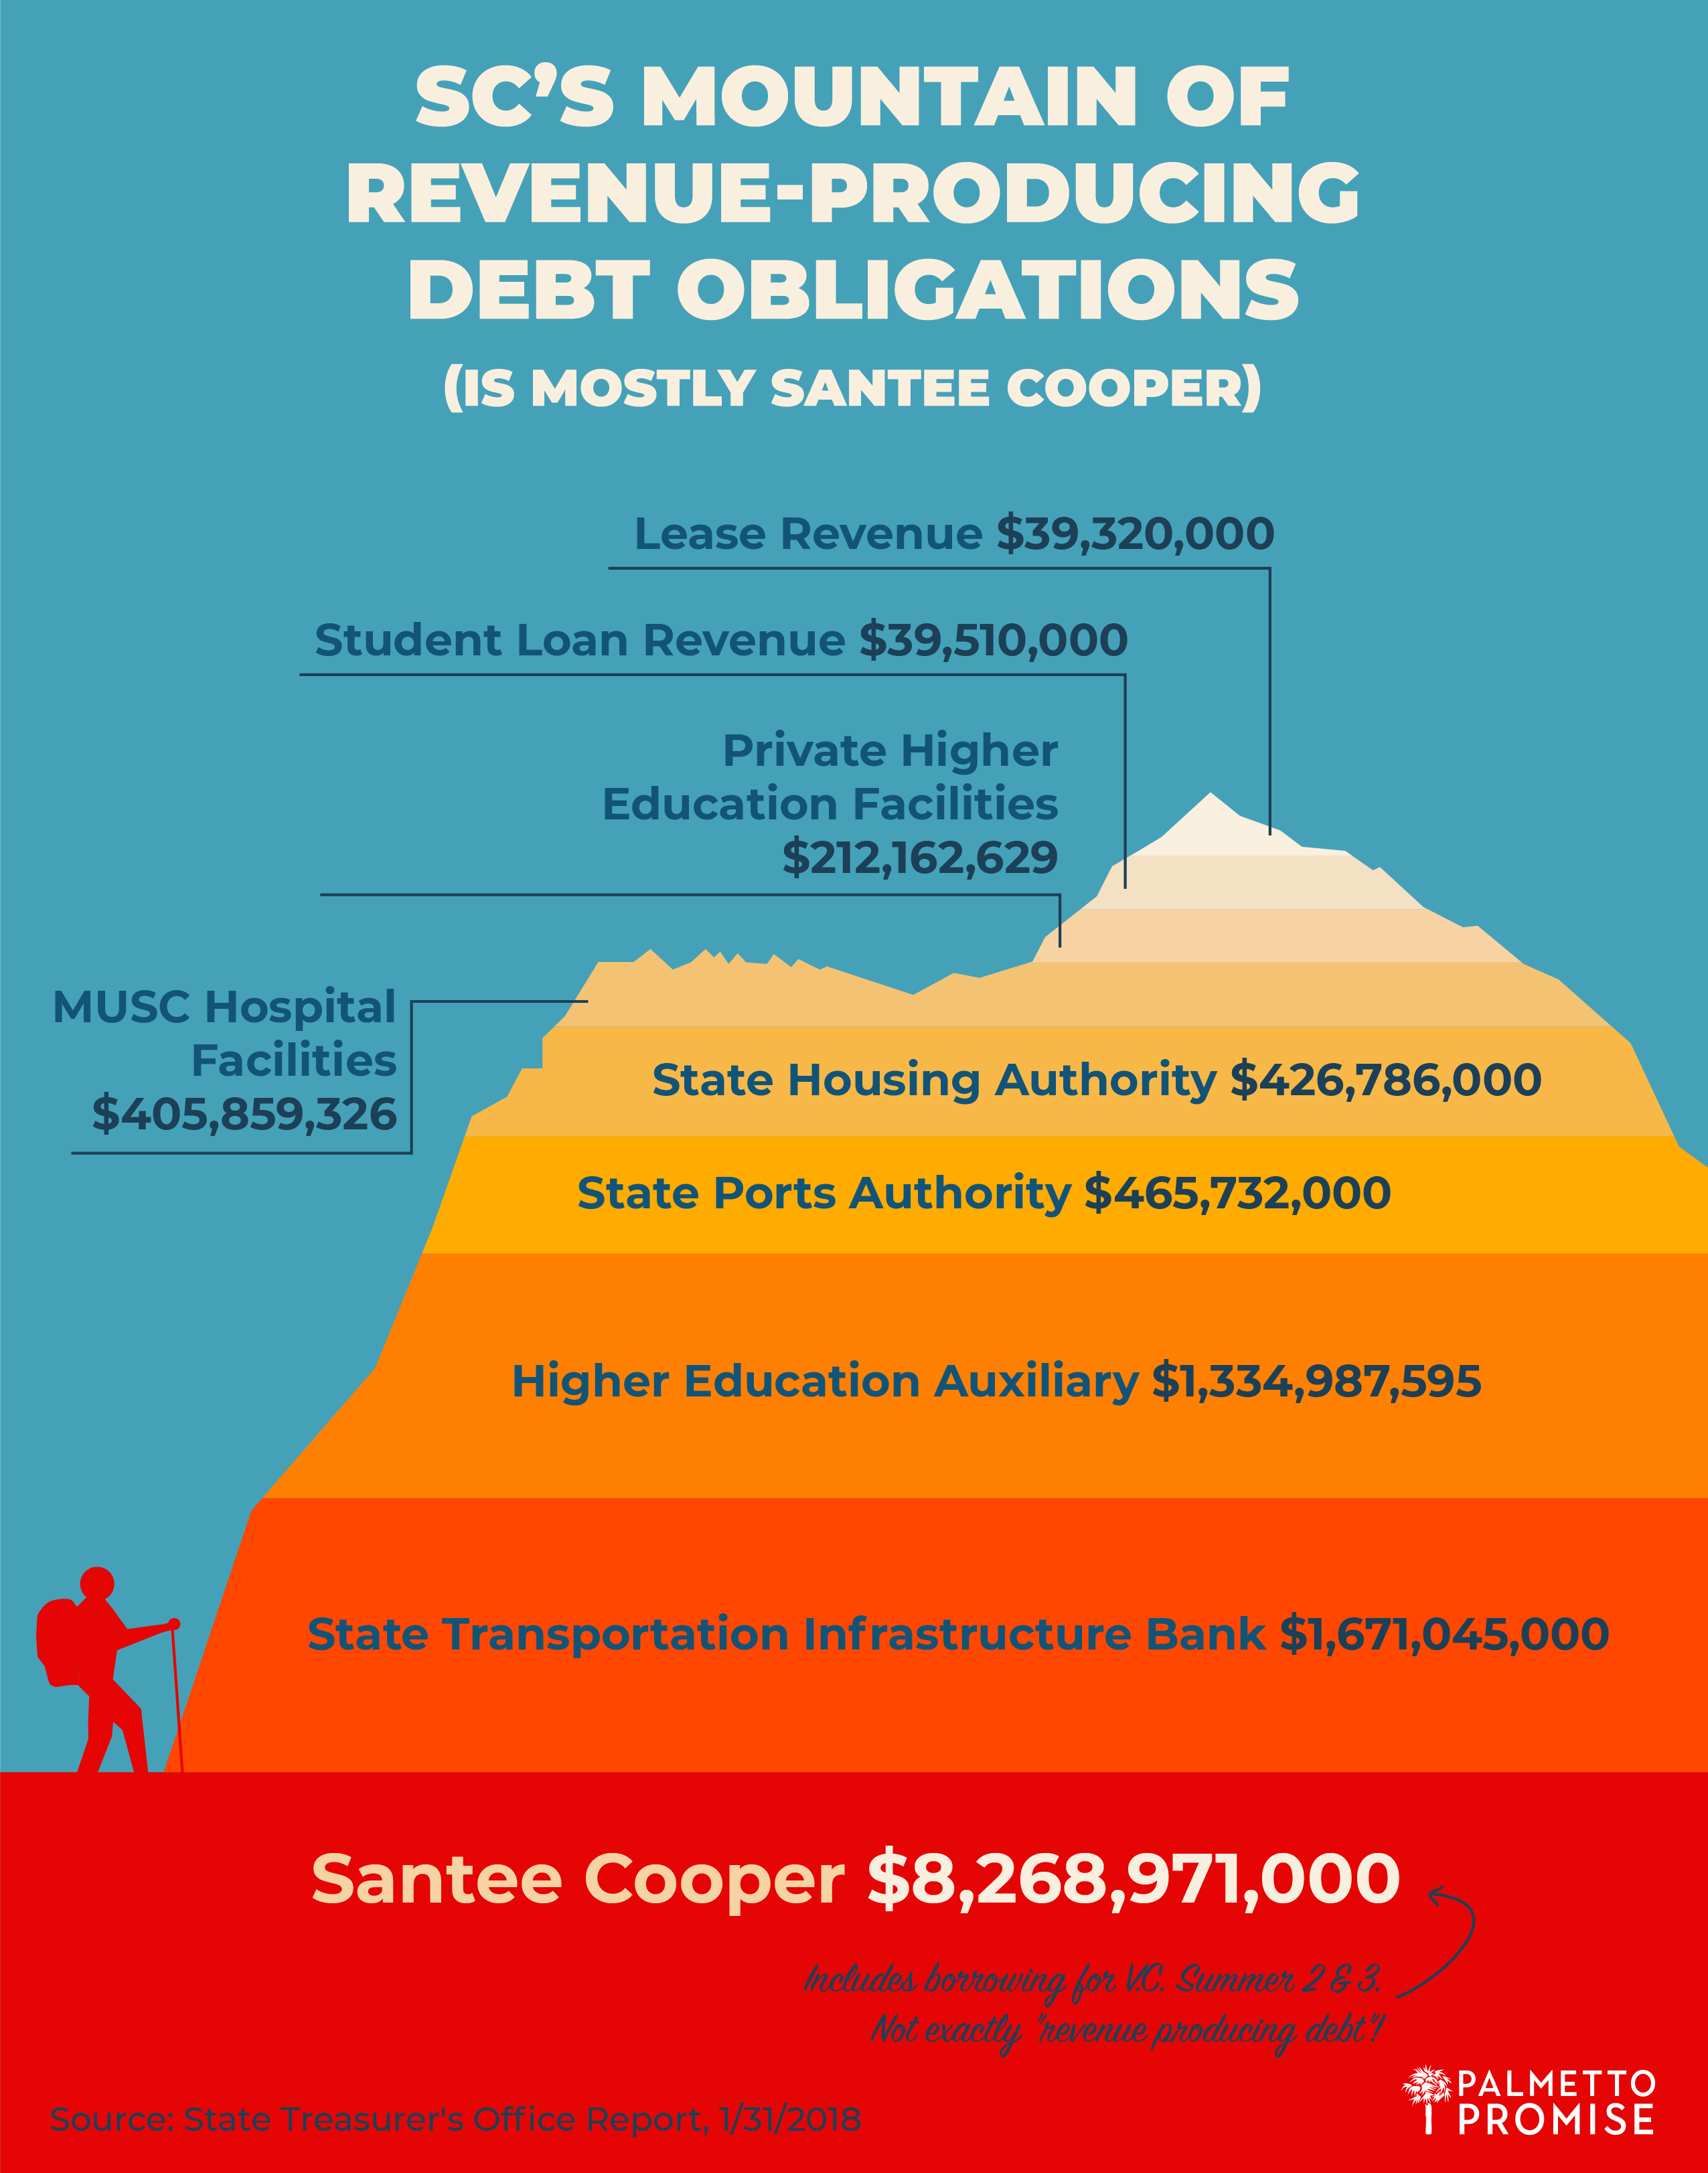 SC’s mountain of revenue-producing debt obligations